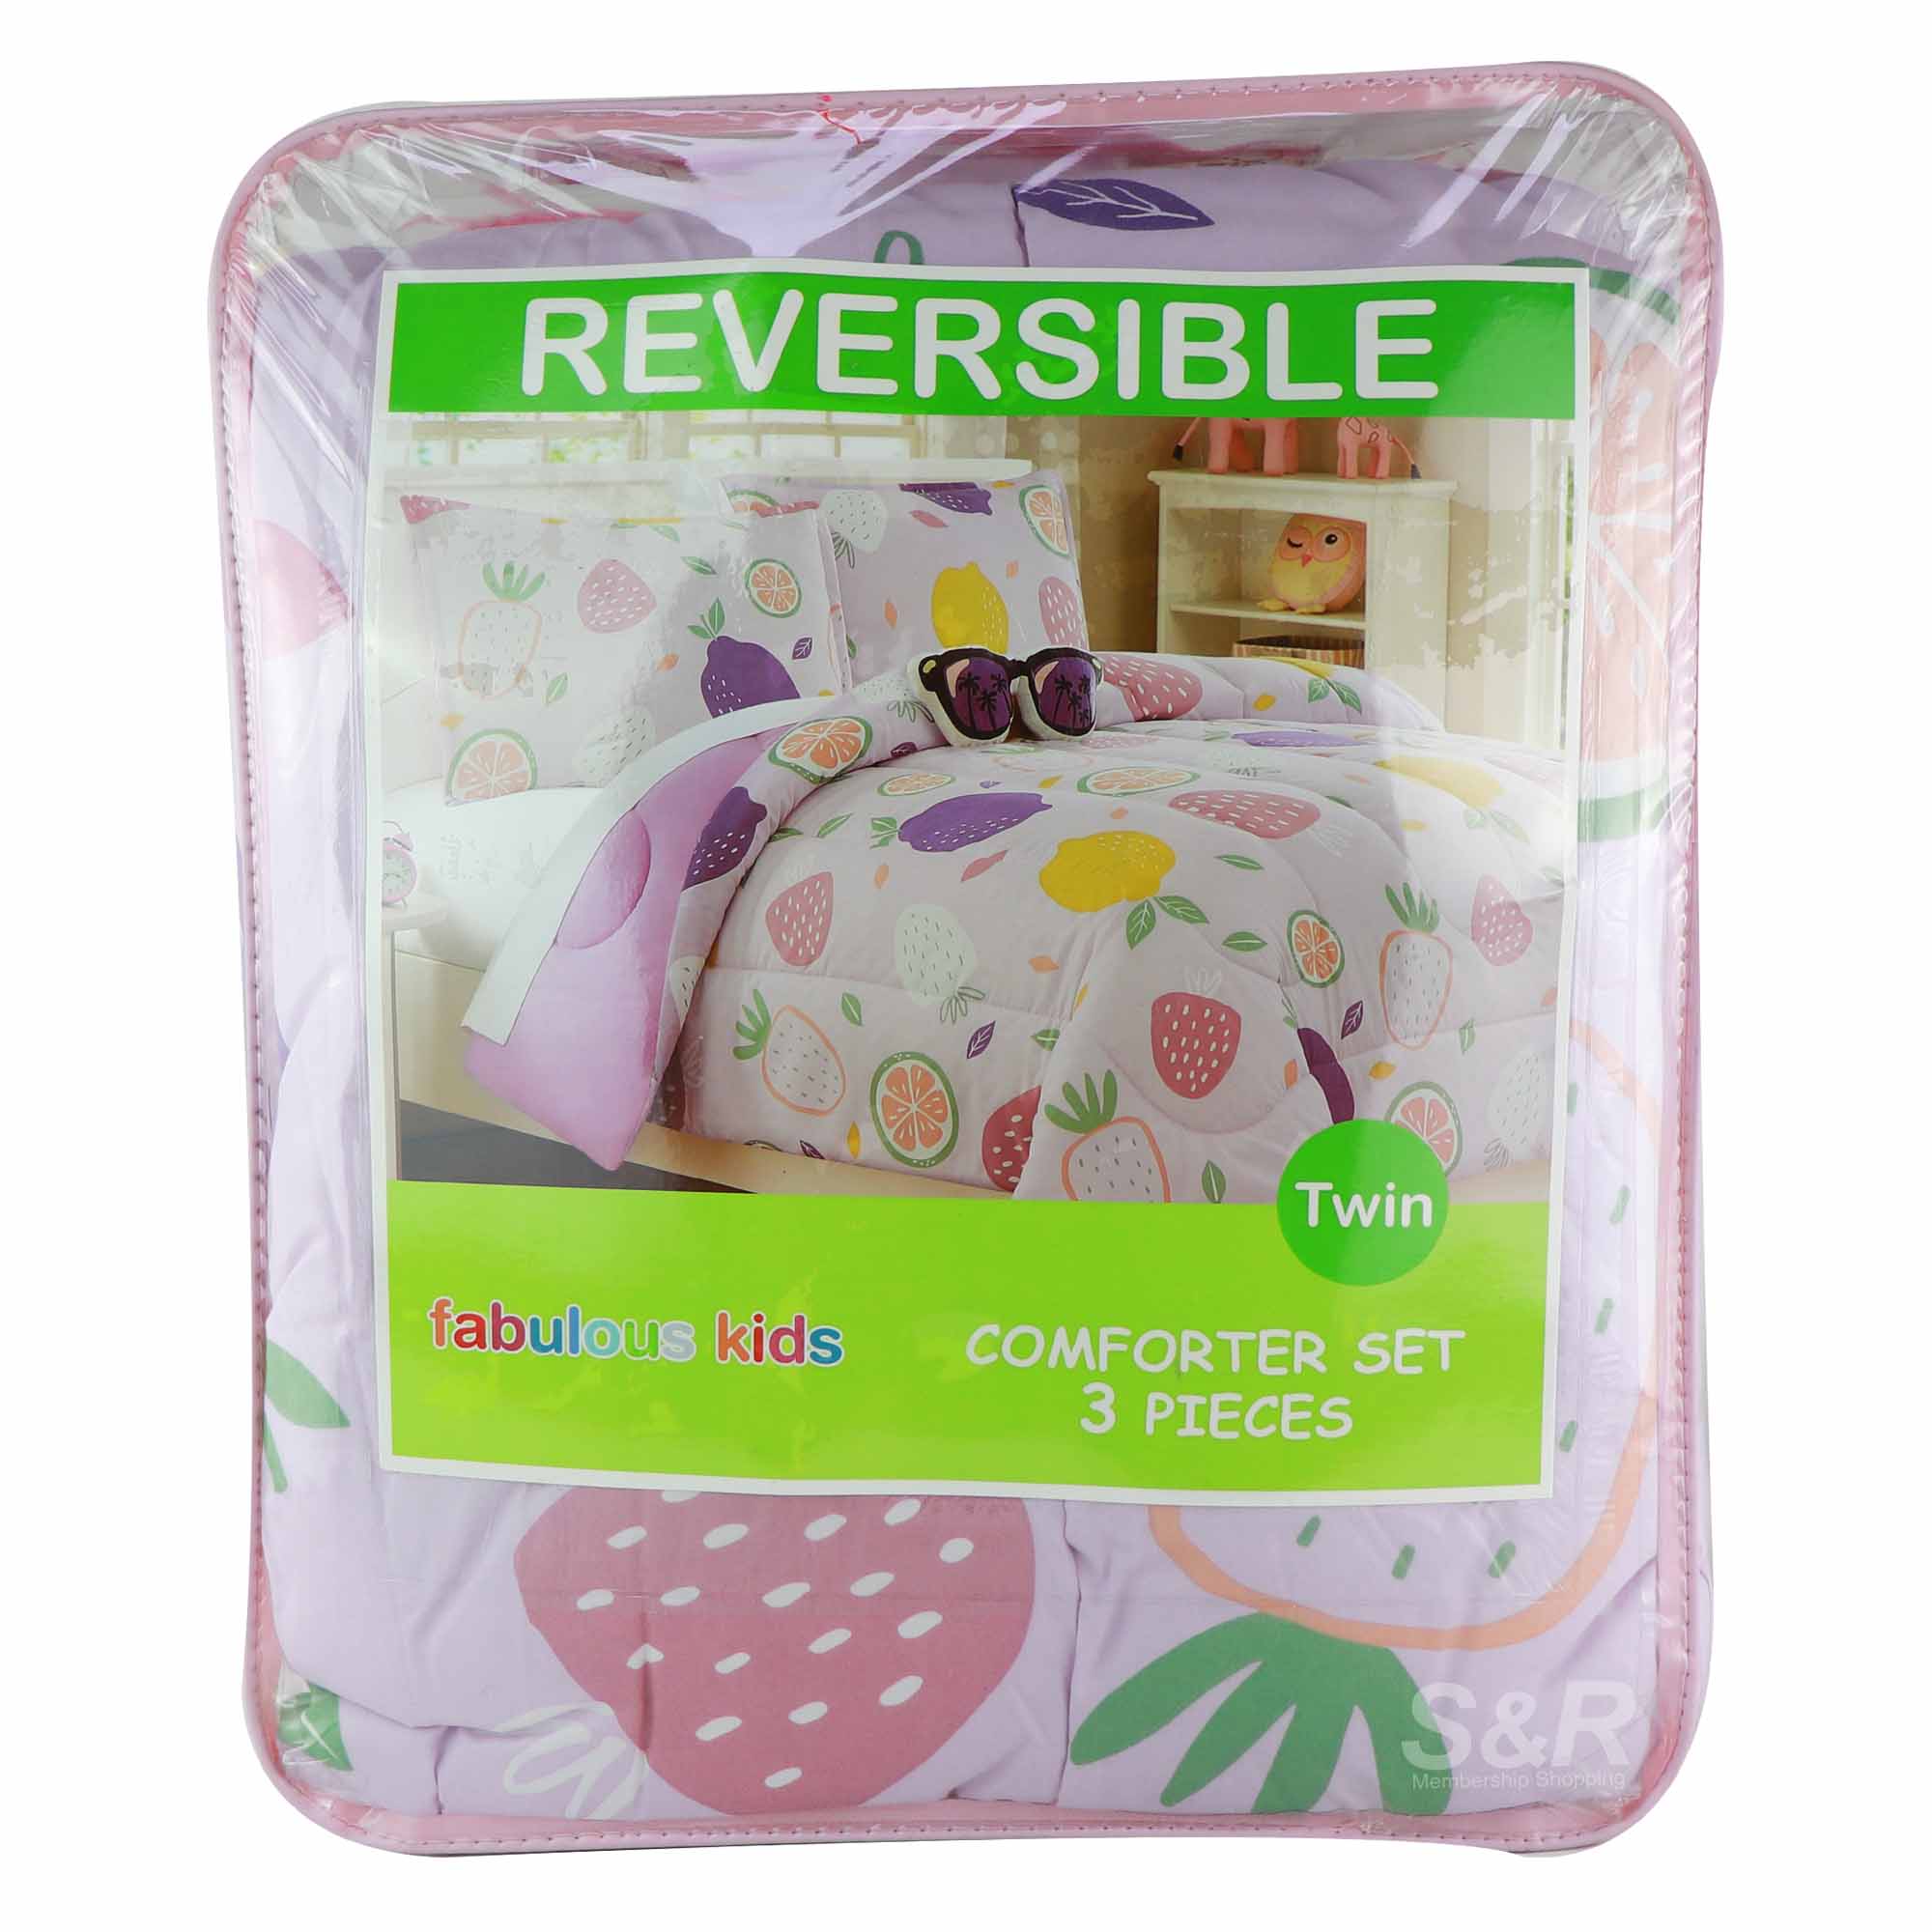 Fabulous Kids Reversible Twin Size Comforter Fruit Design 1 Set